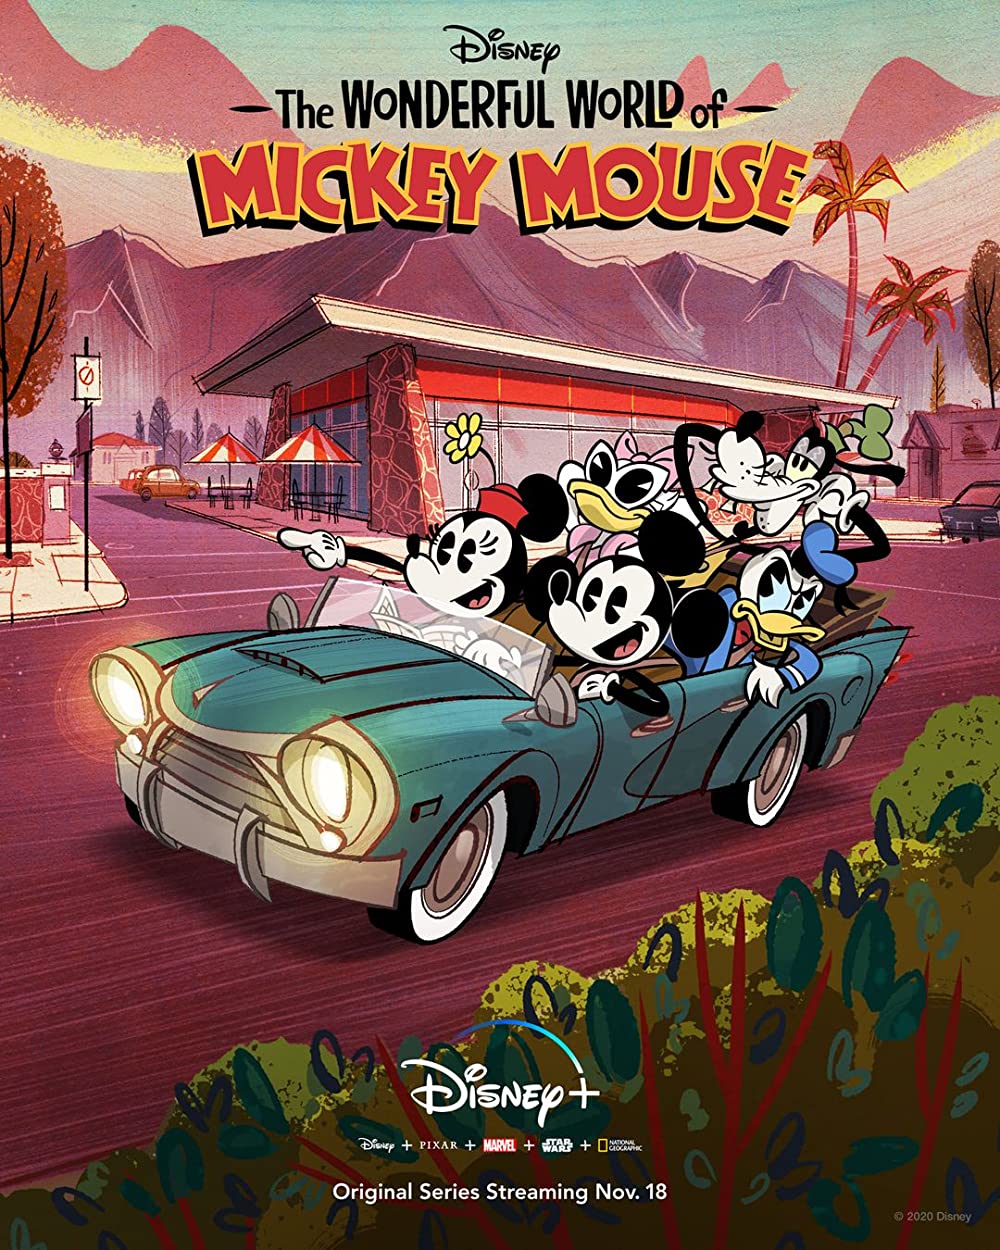 Filmbeschreibung zu The Wonderful World of Mickey Mouse